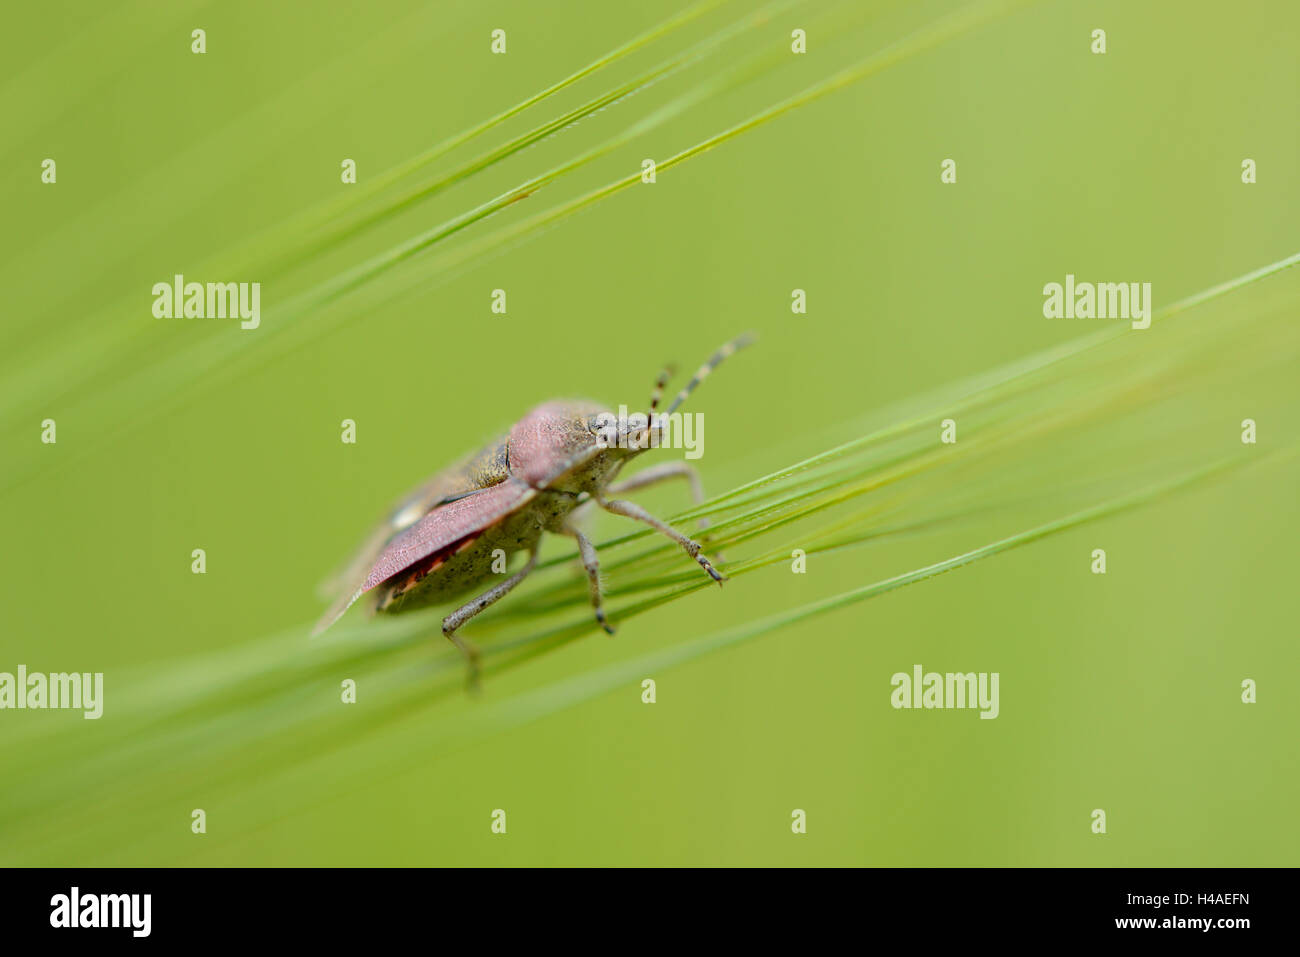 Squash bug, Coreus marginatus, blade of grass, side view, sitting, Stock Photo